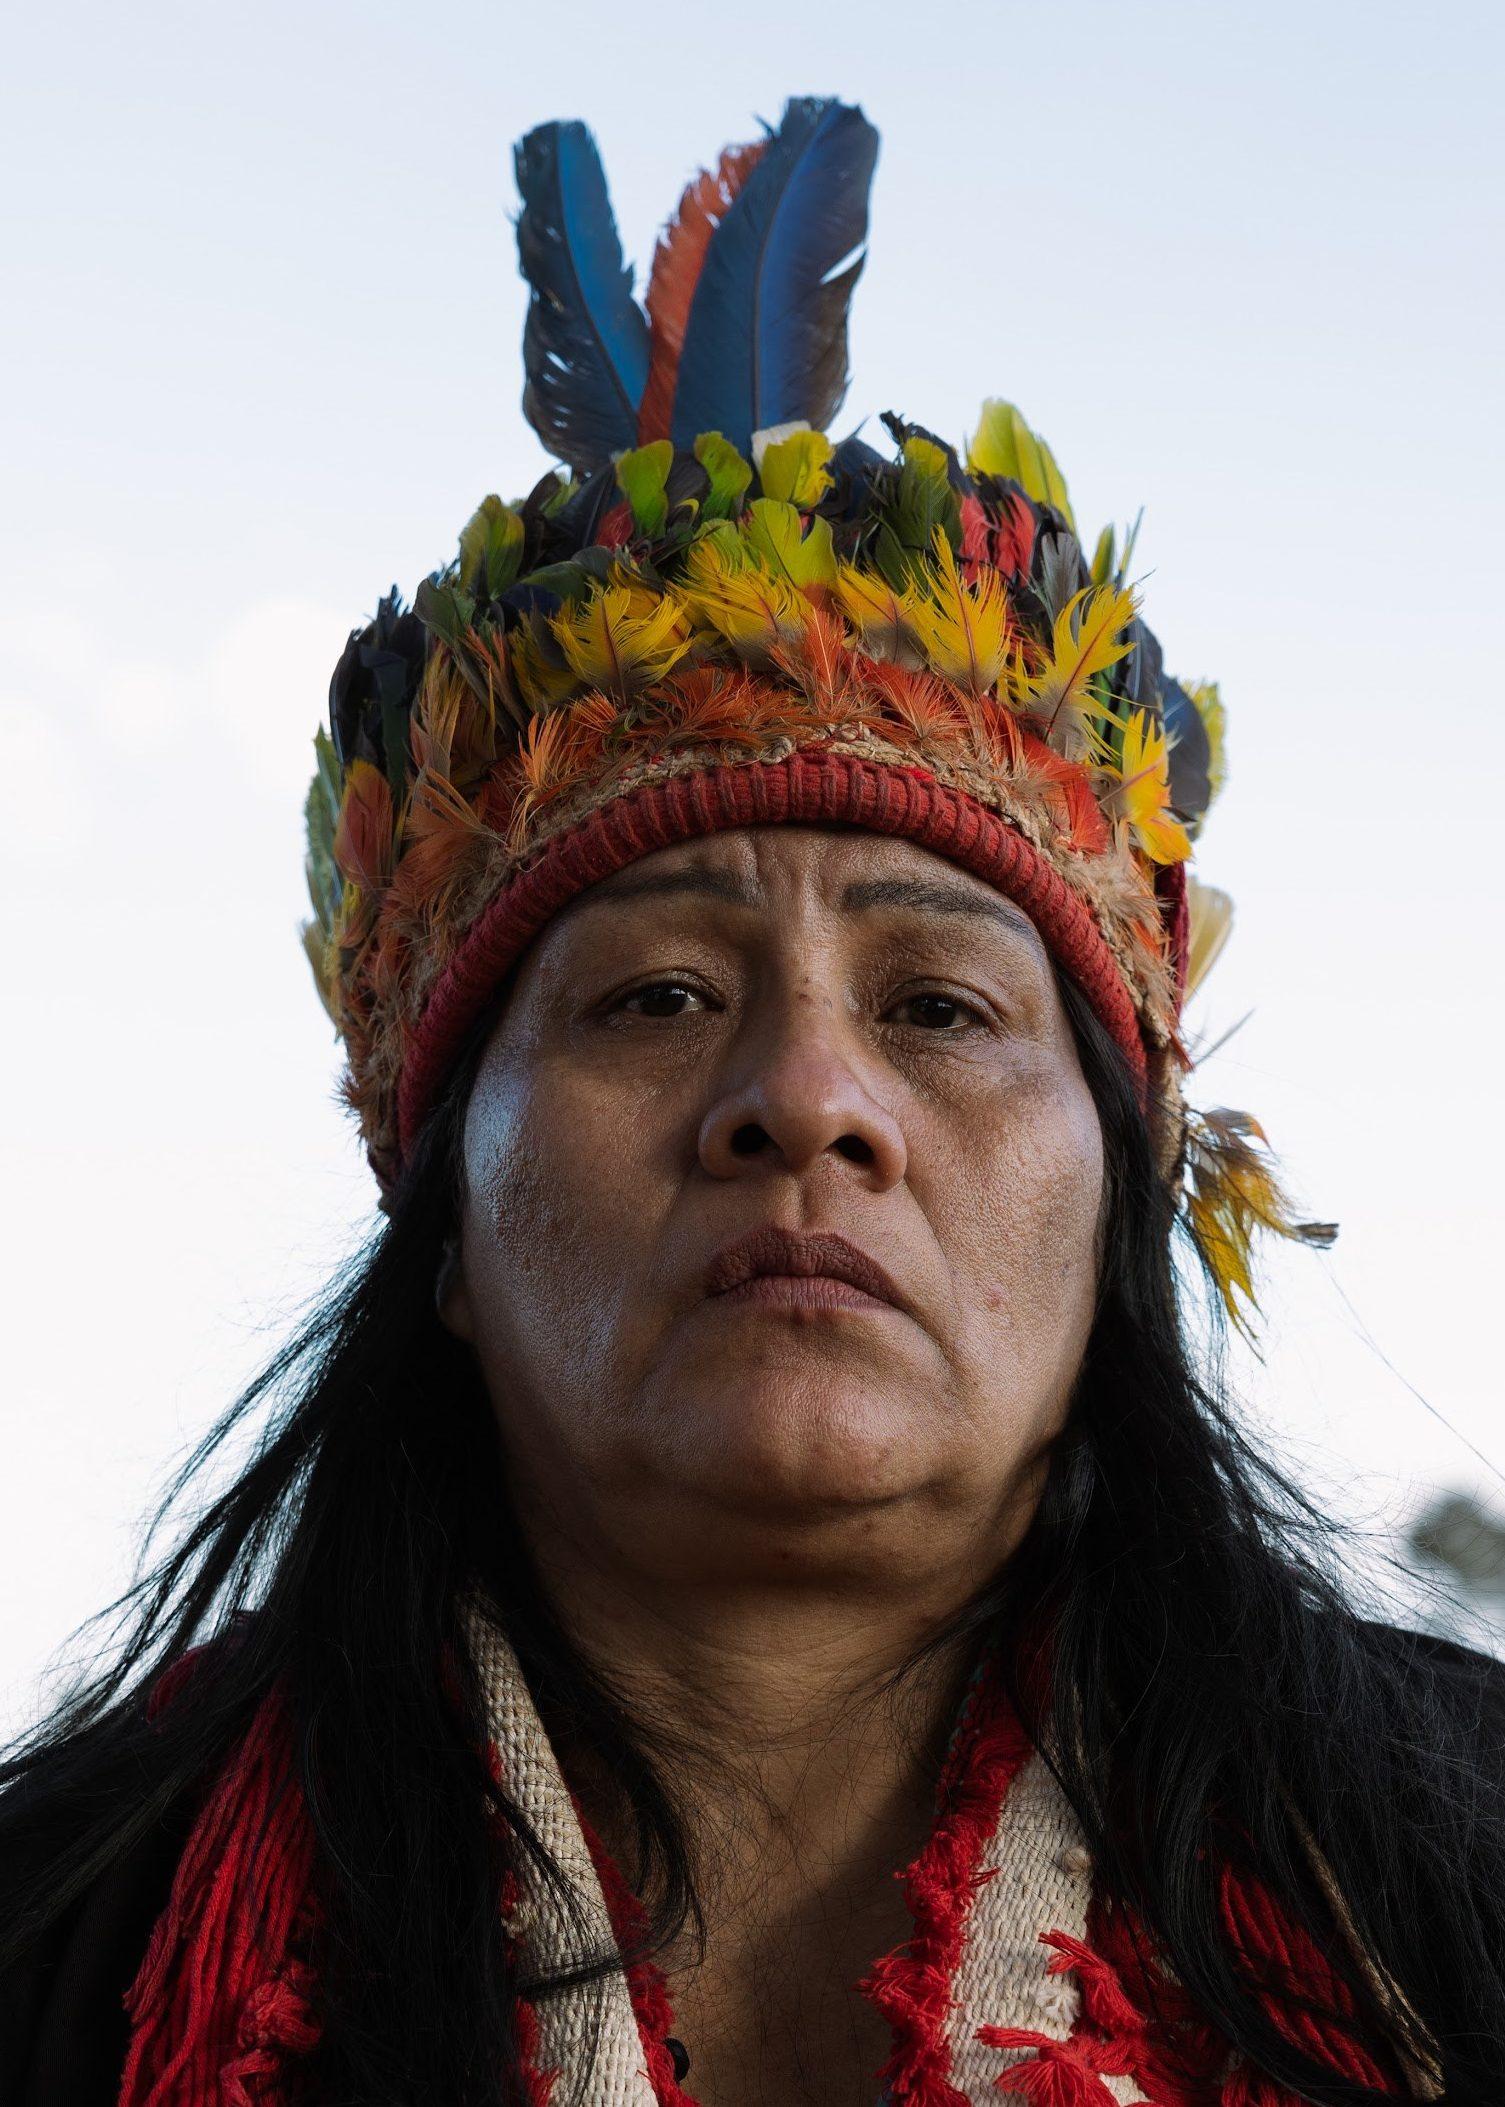 Valdelice Veron from the Guarani Kaiowá community